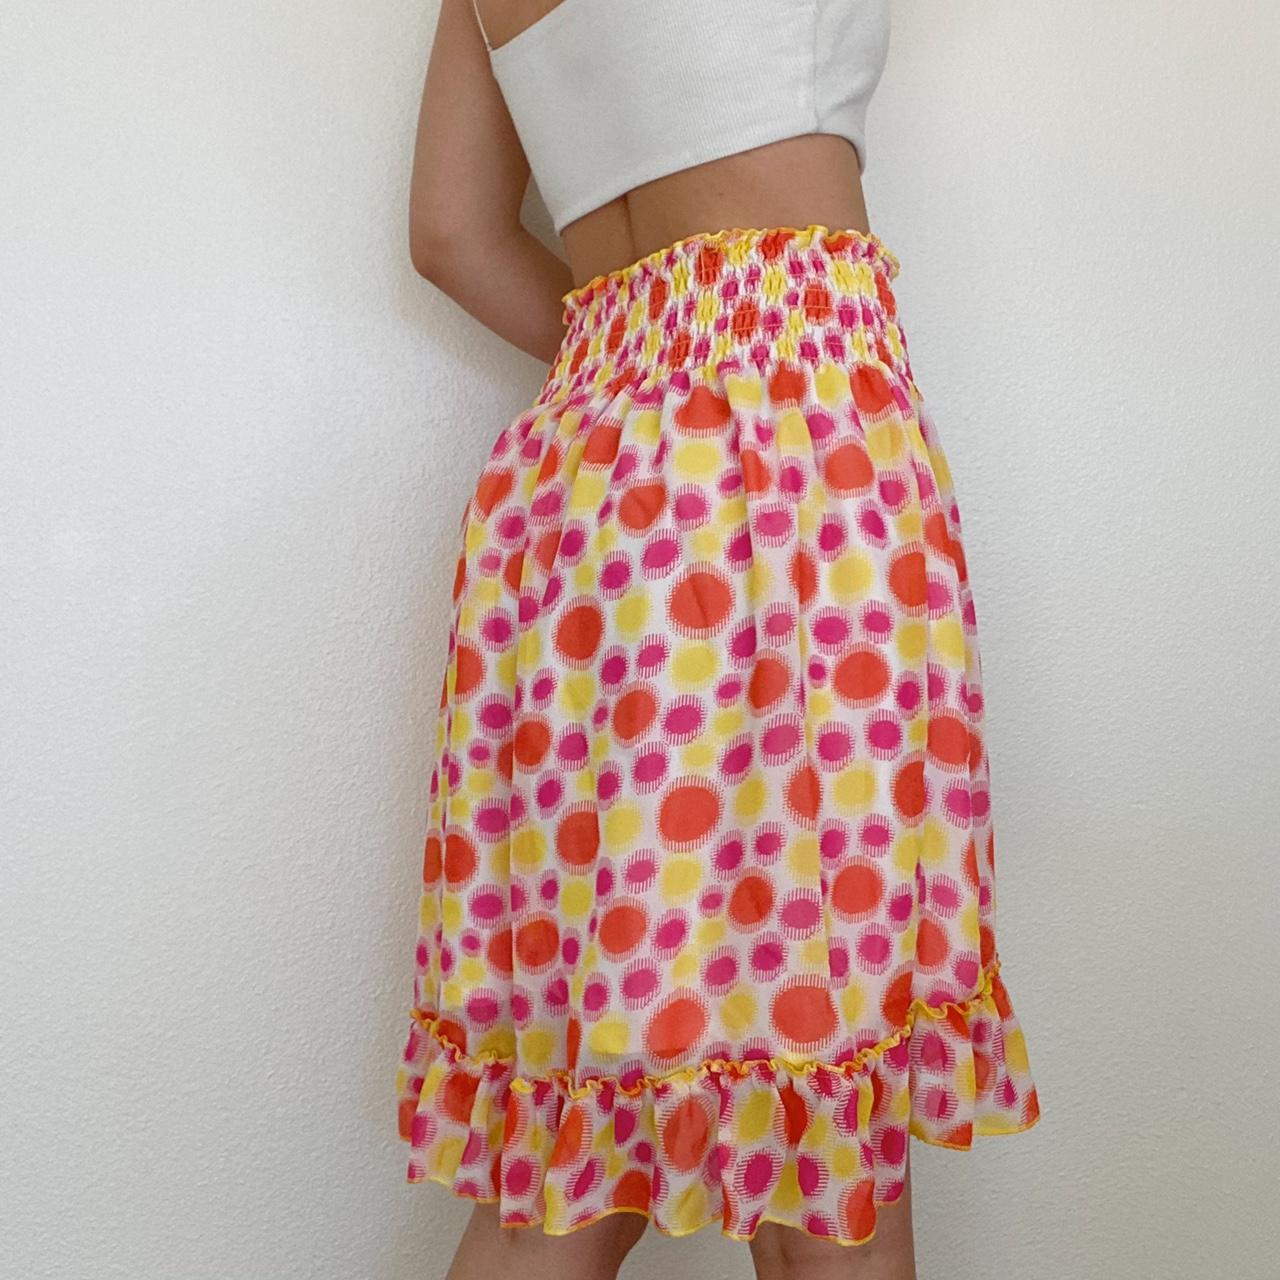 Y2k vintage multicolor skirt! This retro skirt has a... - Depop